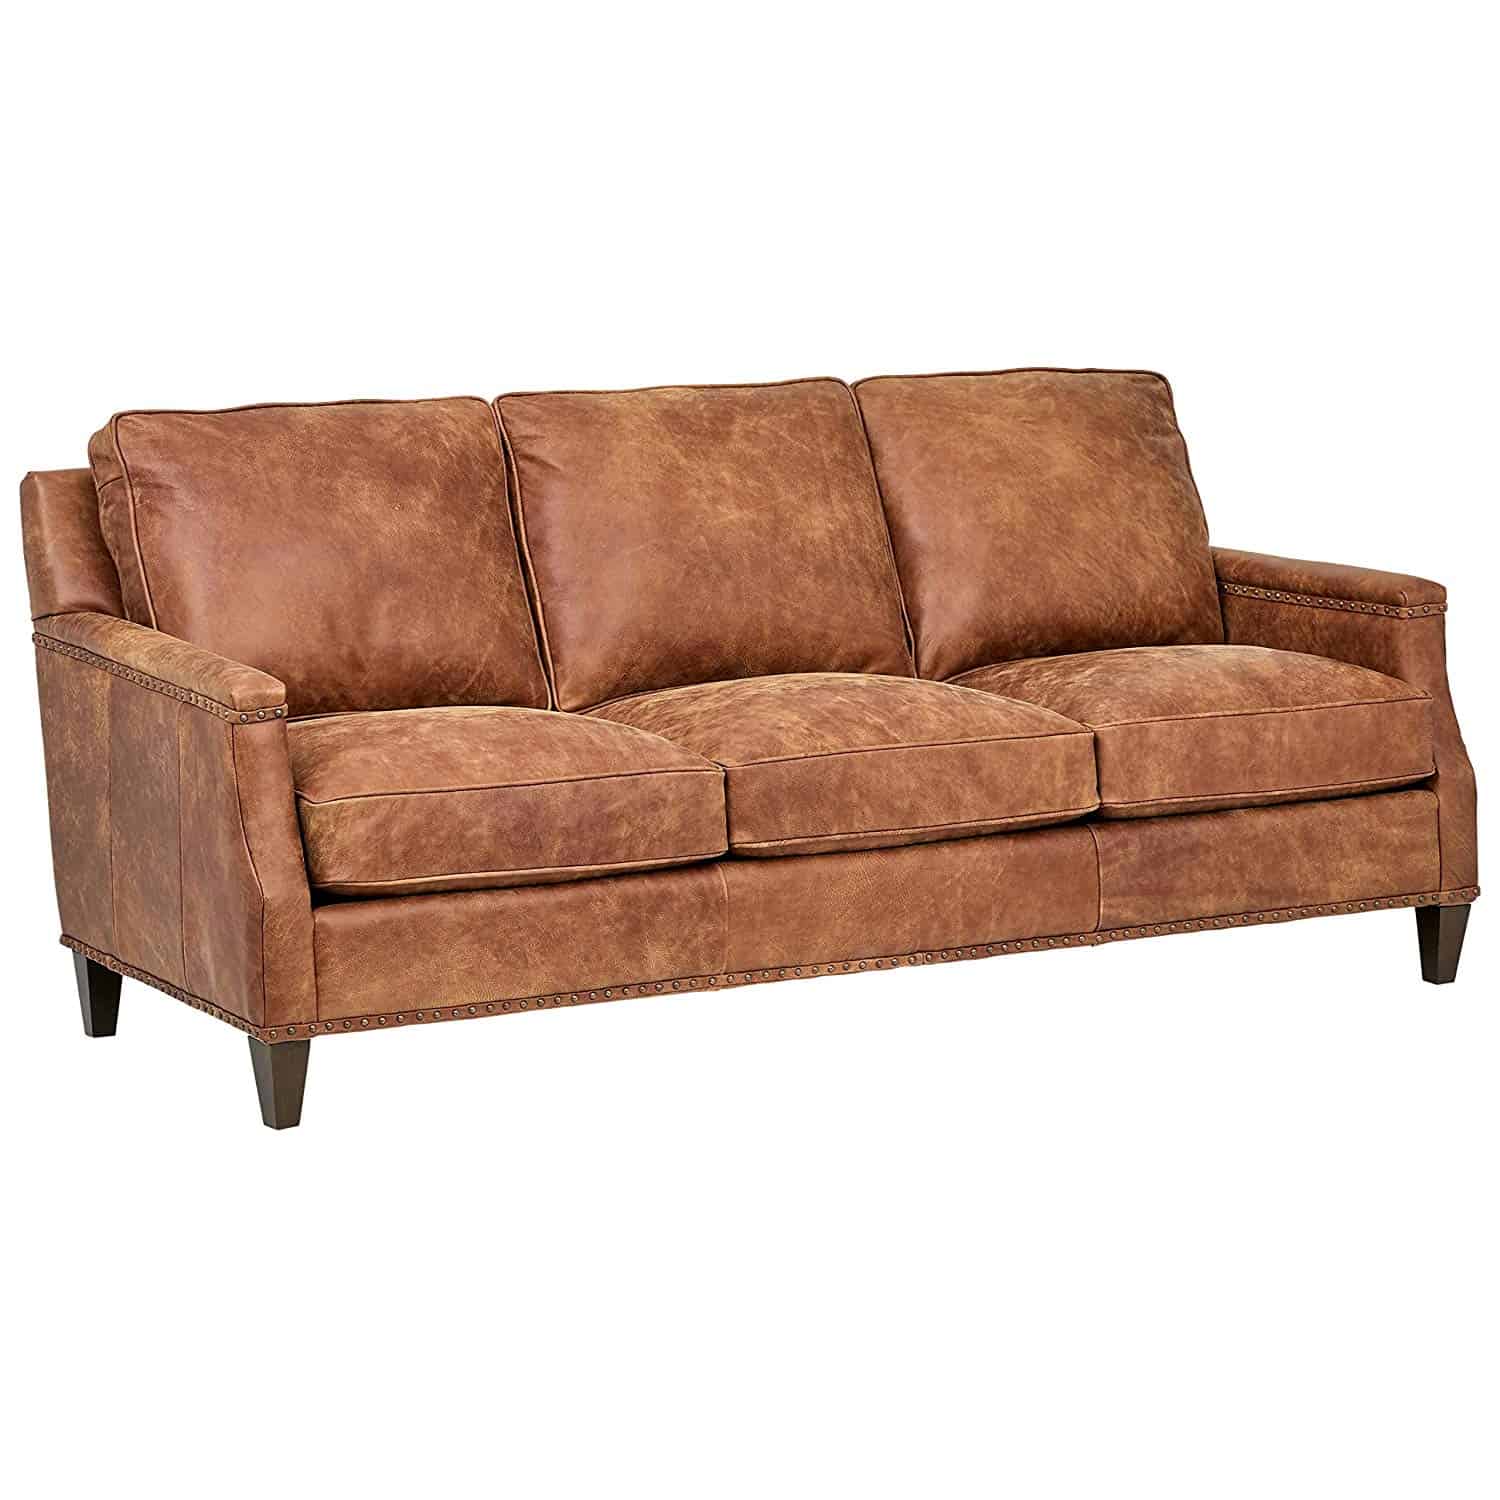 Stone & Beam Marin Leather Studded Sofa